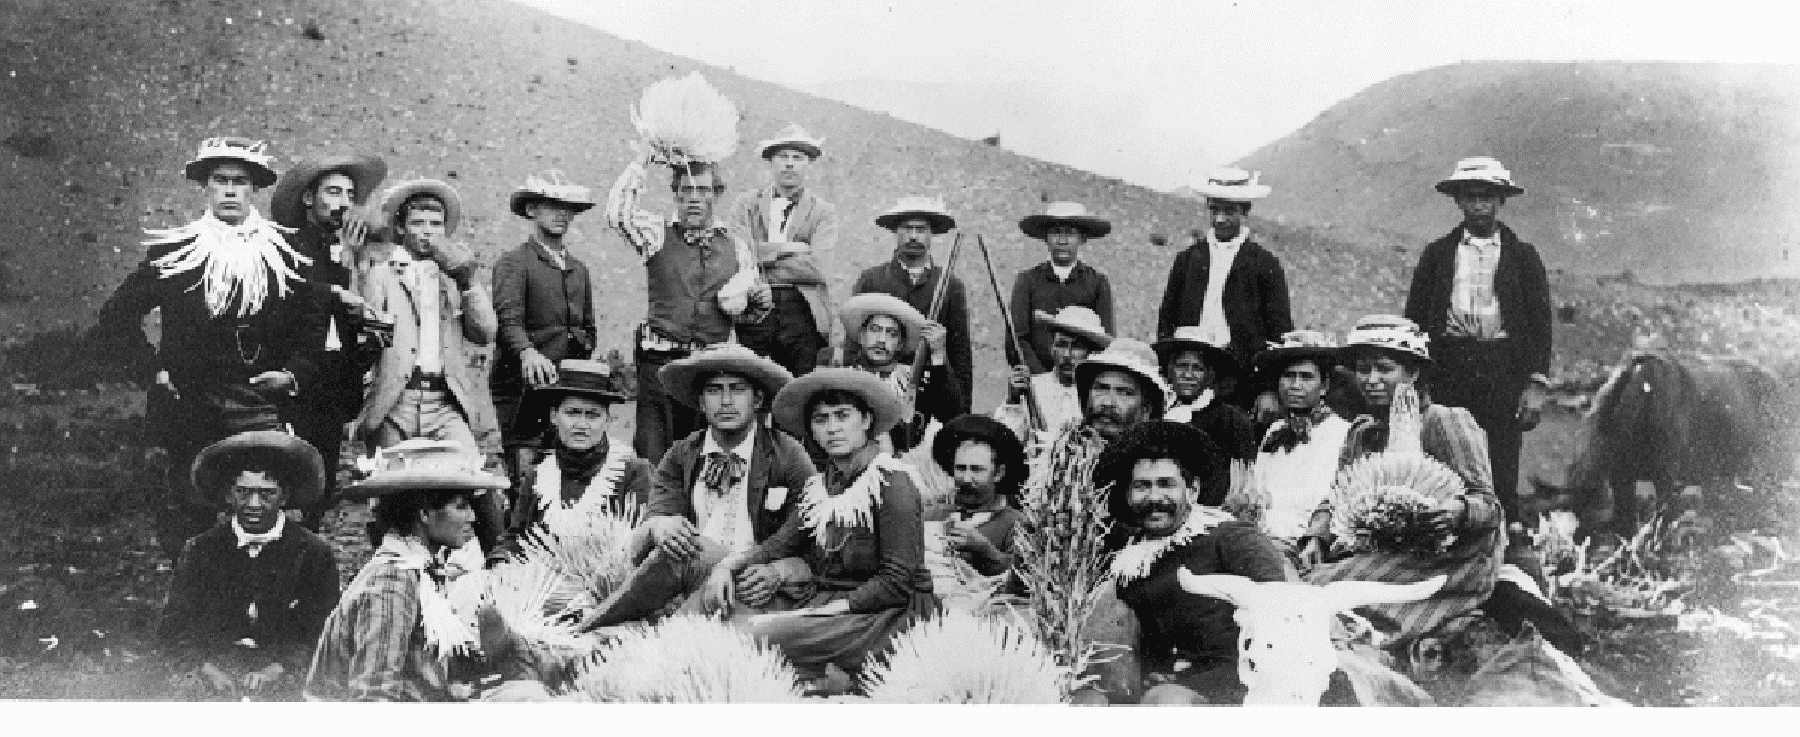 Wedding party in Haleakala Crater, circa 1890